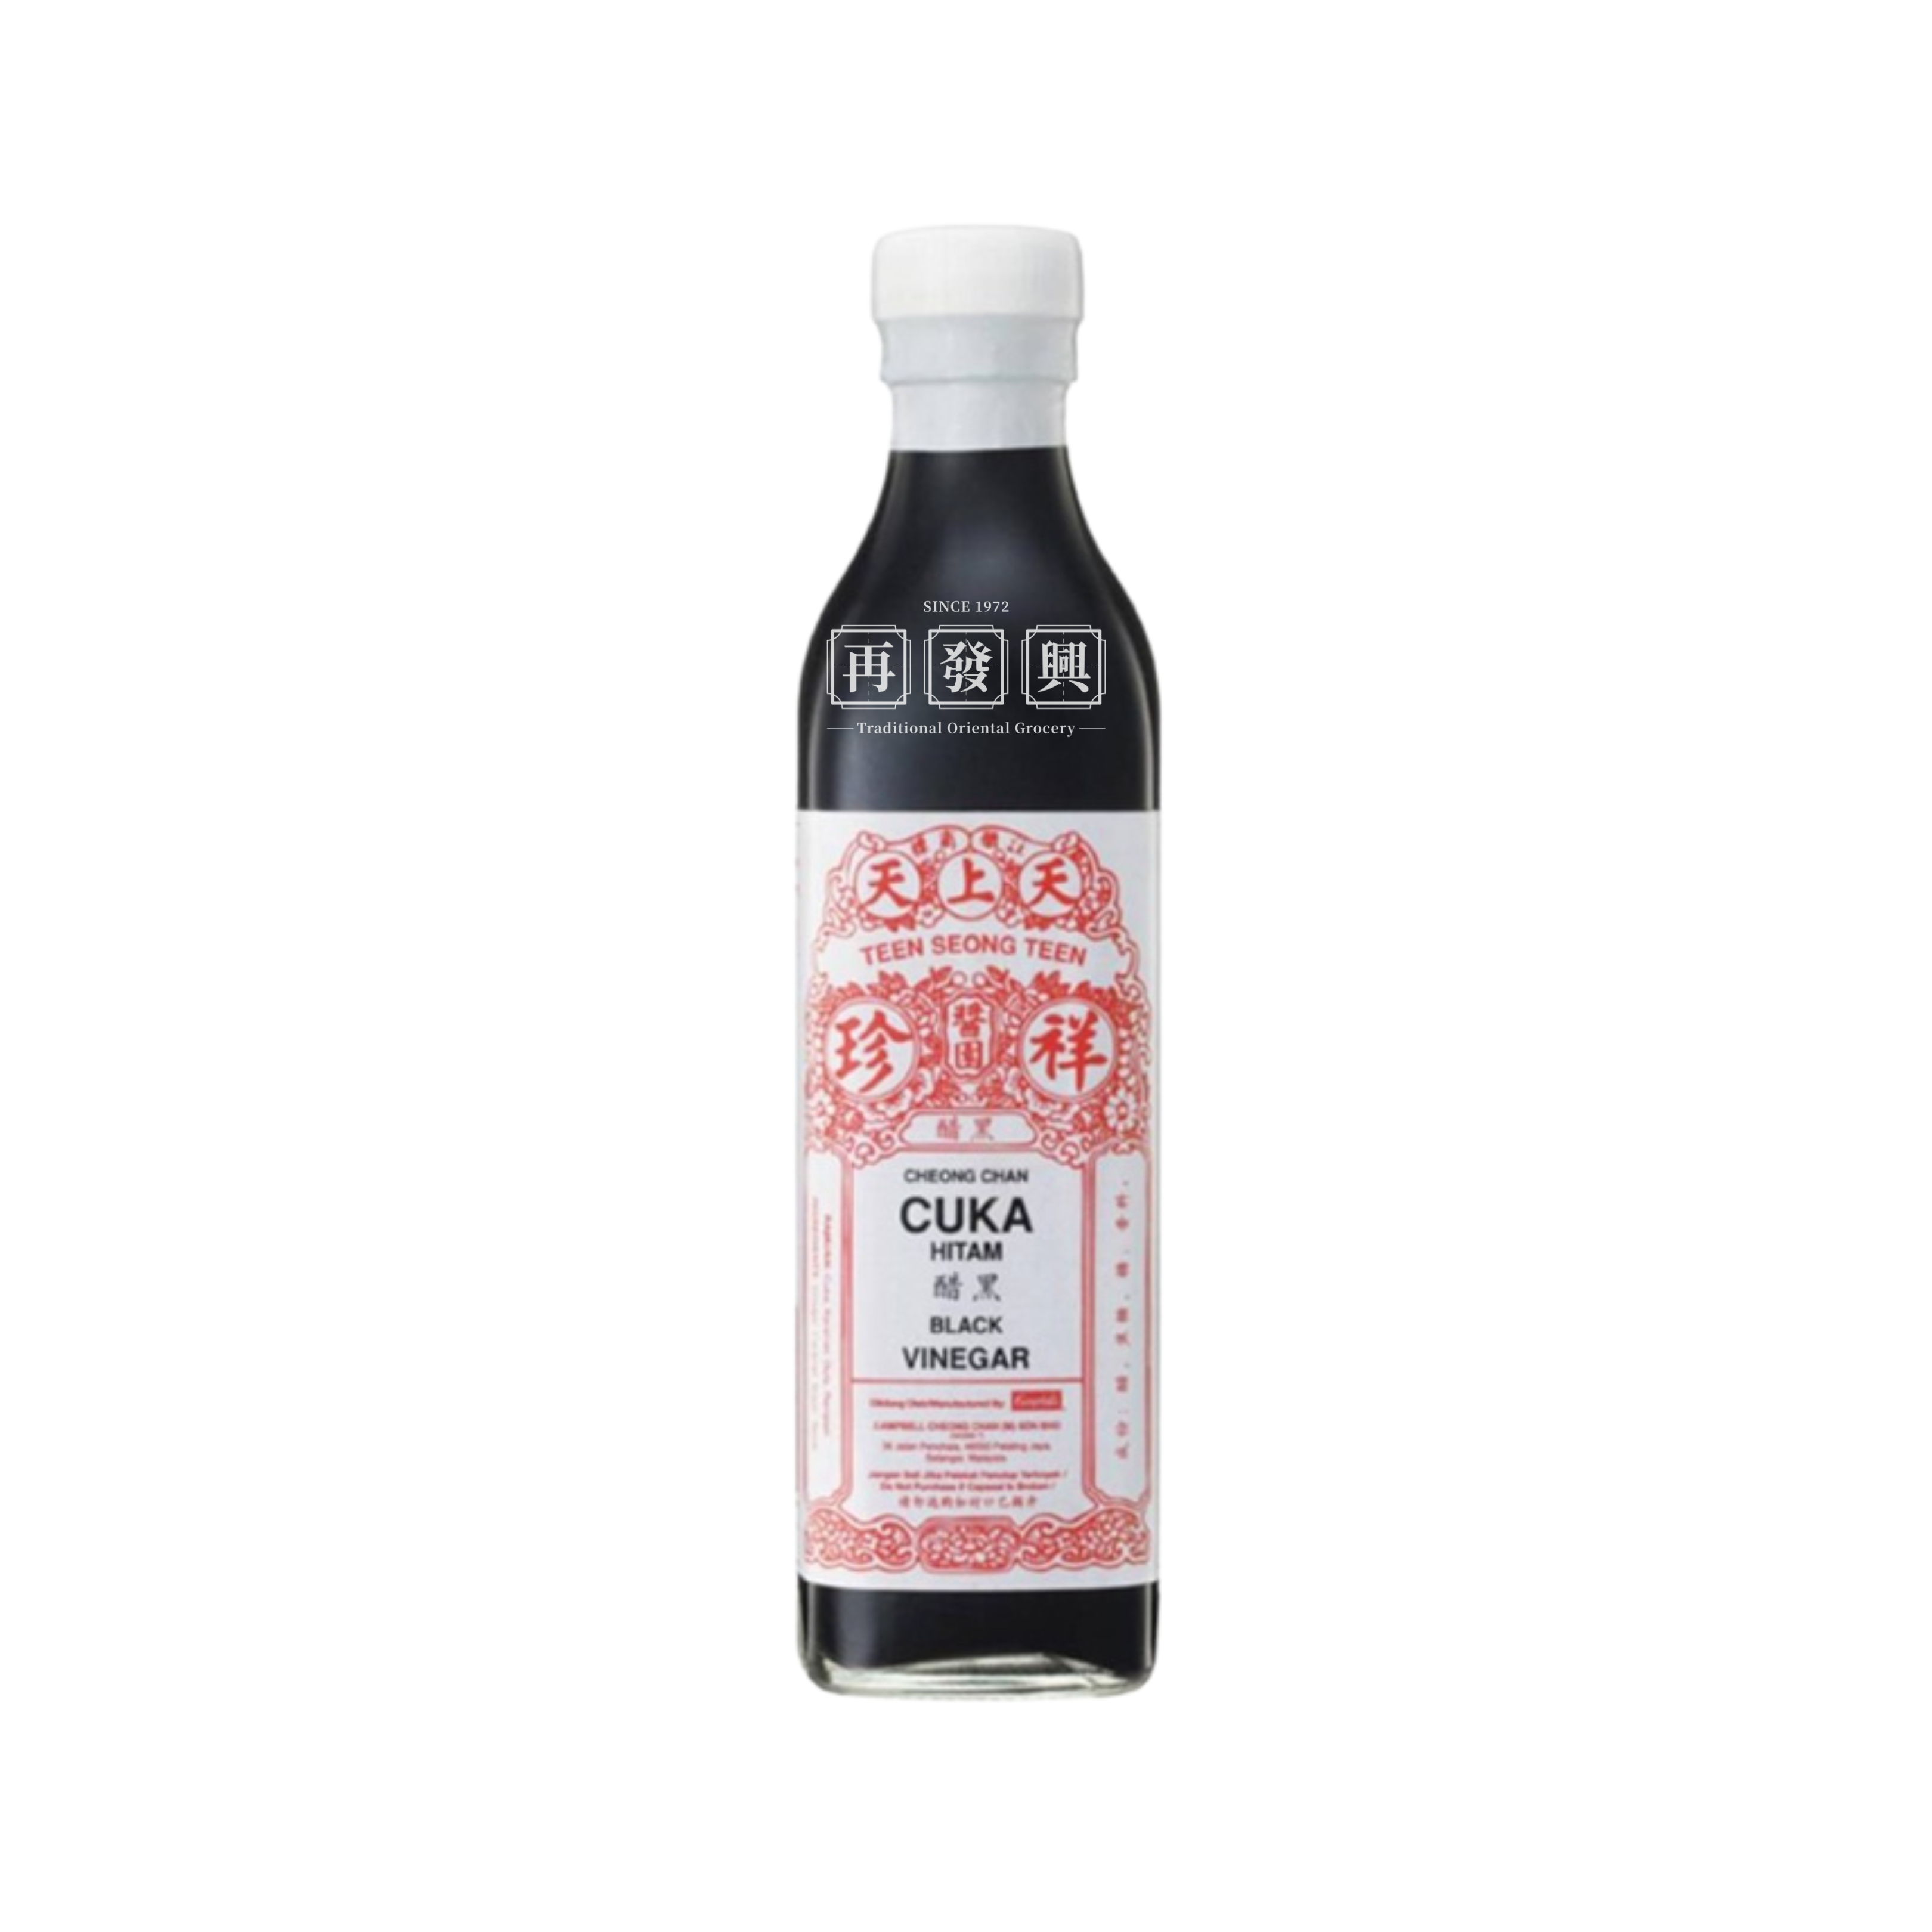 TST Black Vinegar Cuka Hitam 375ml